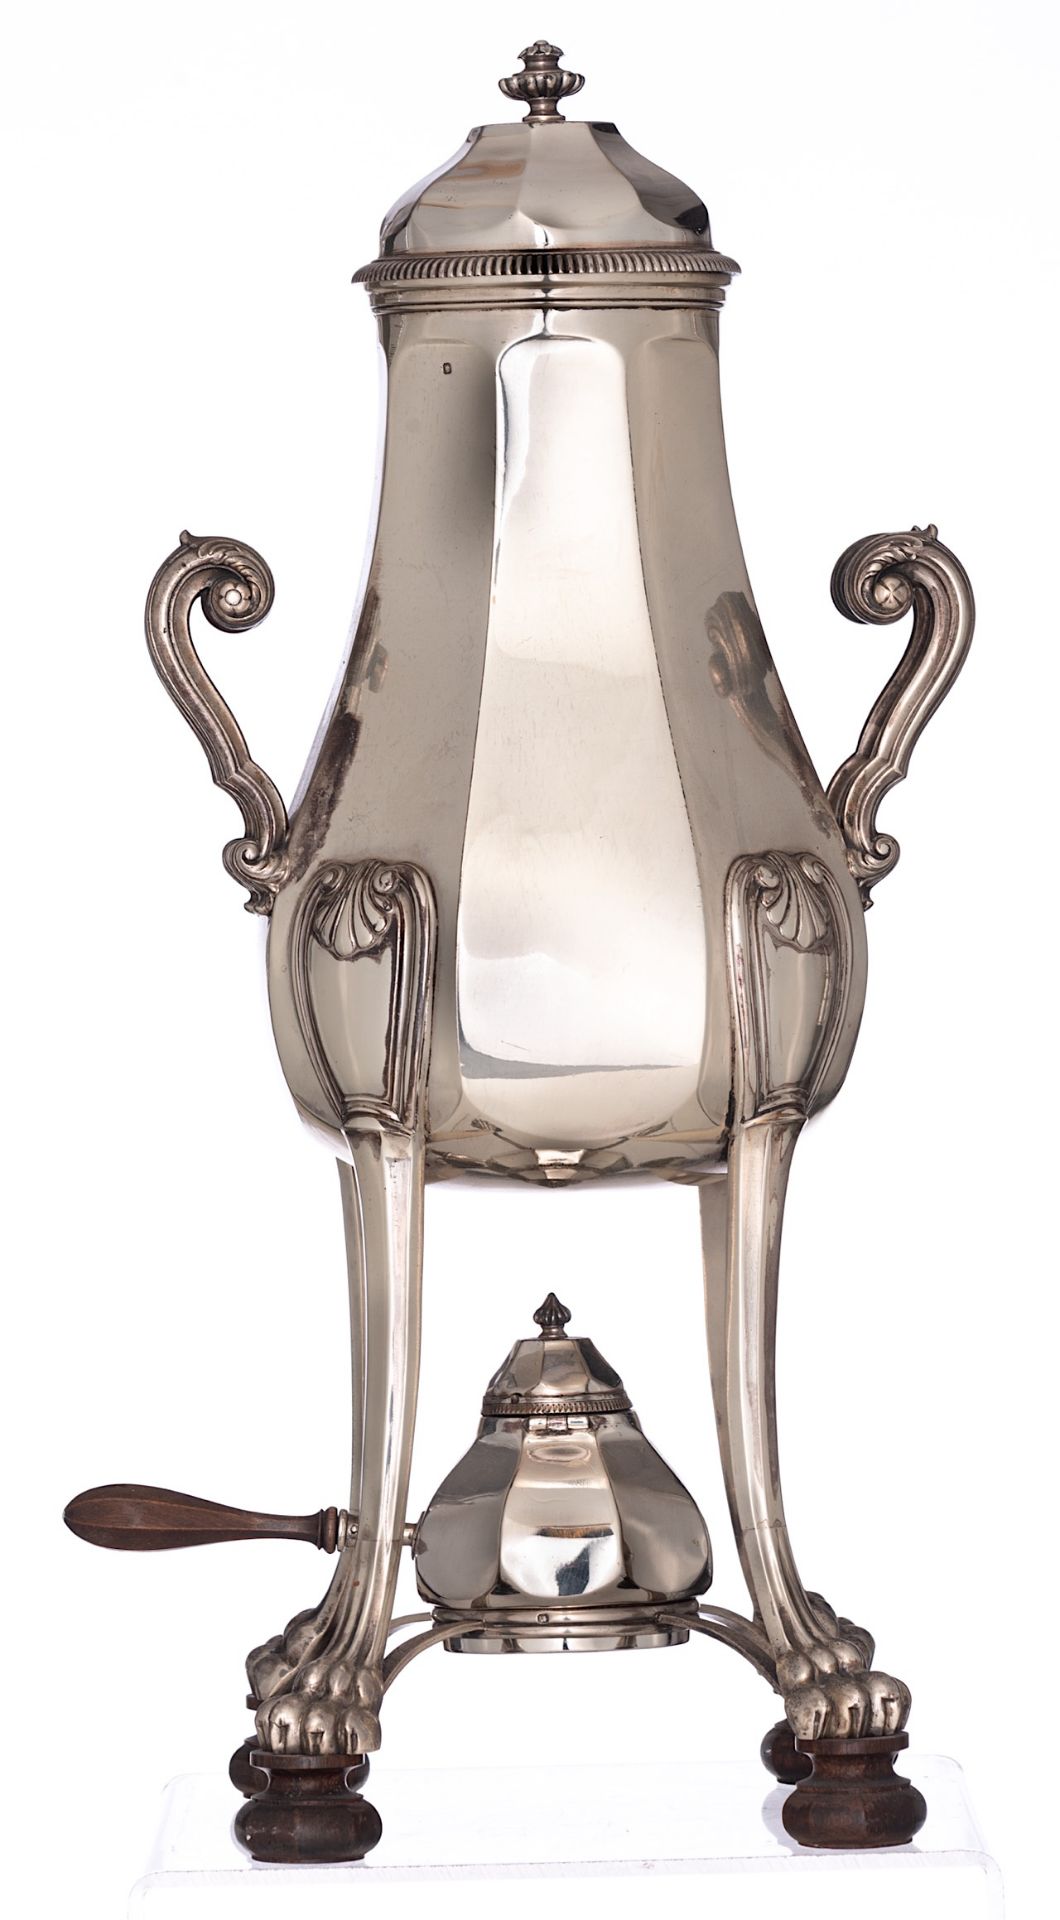 A French - Paris 19thC Regence silver tea urn, maker's mark 'Tetard - Paris', H 42,6 cm - weight c. - Image 4 of 14